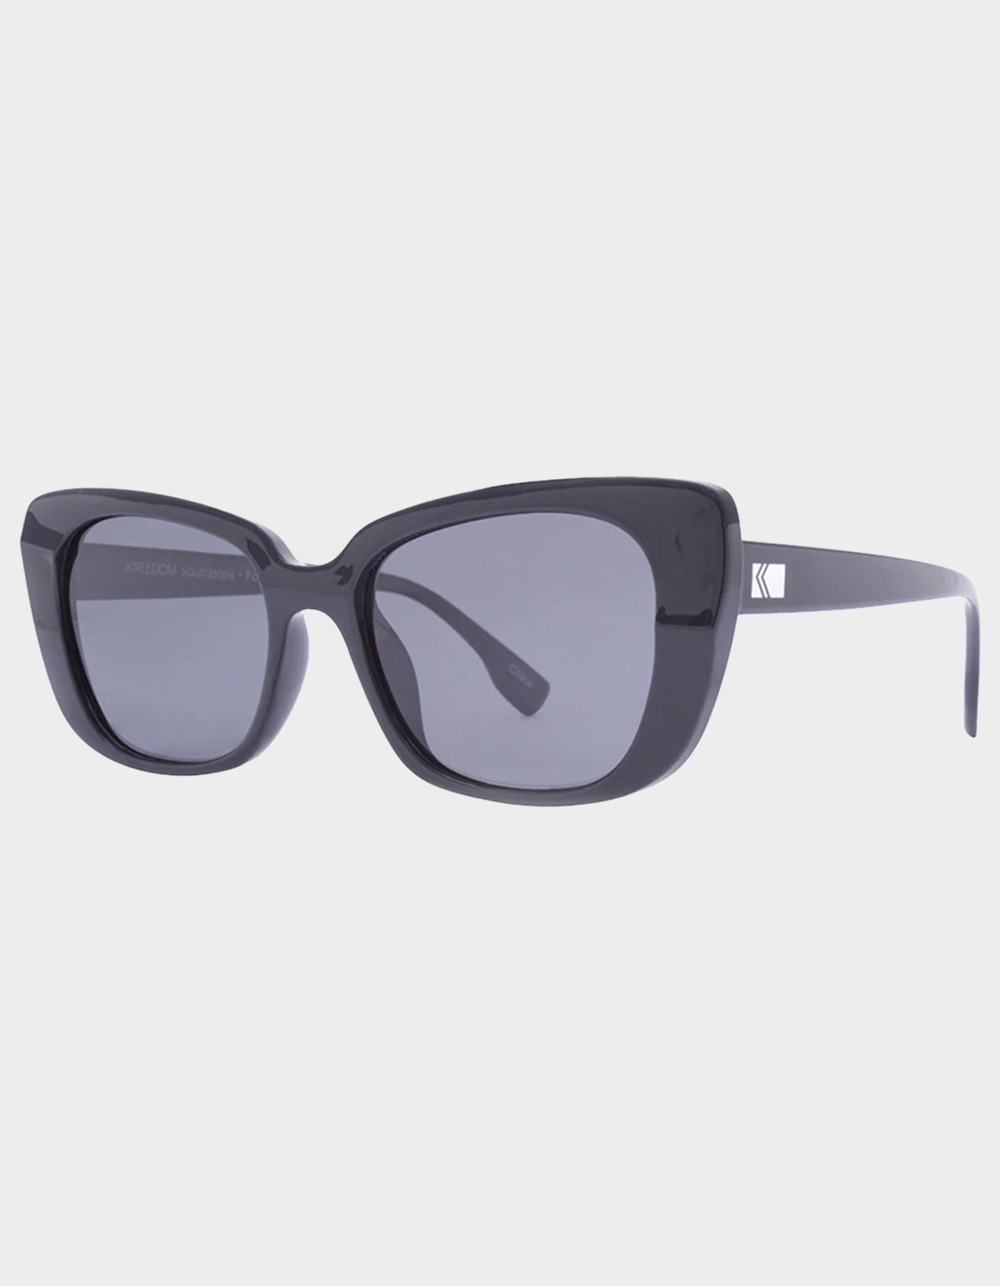 chanel polarized sunglasses for women